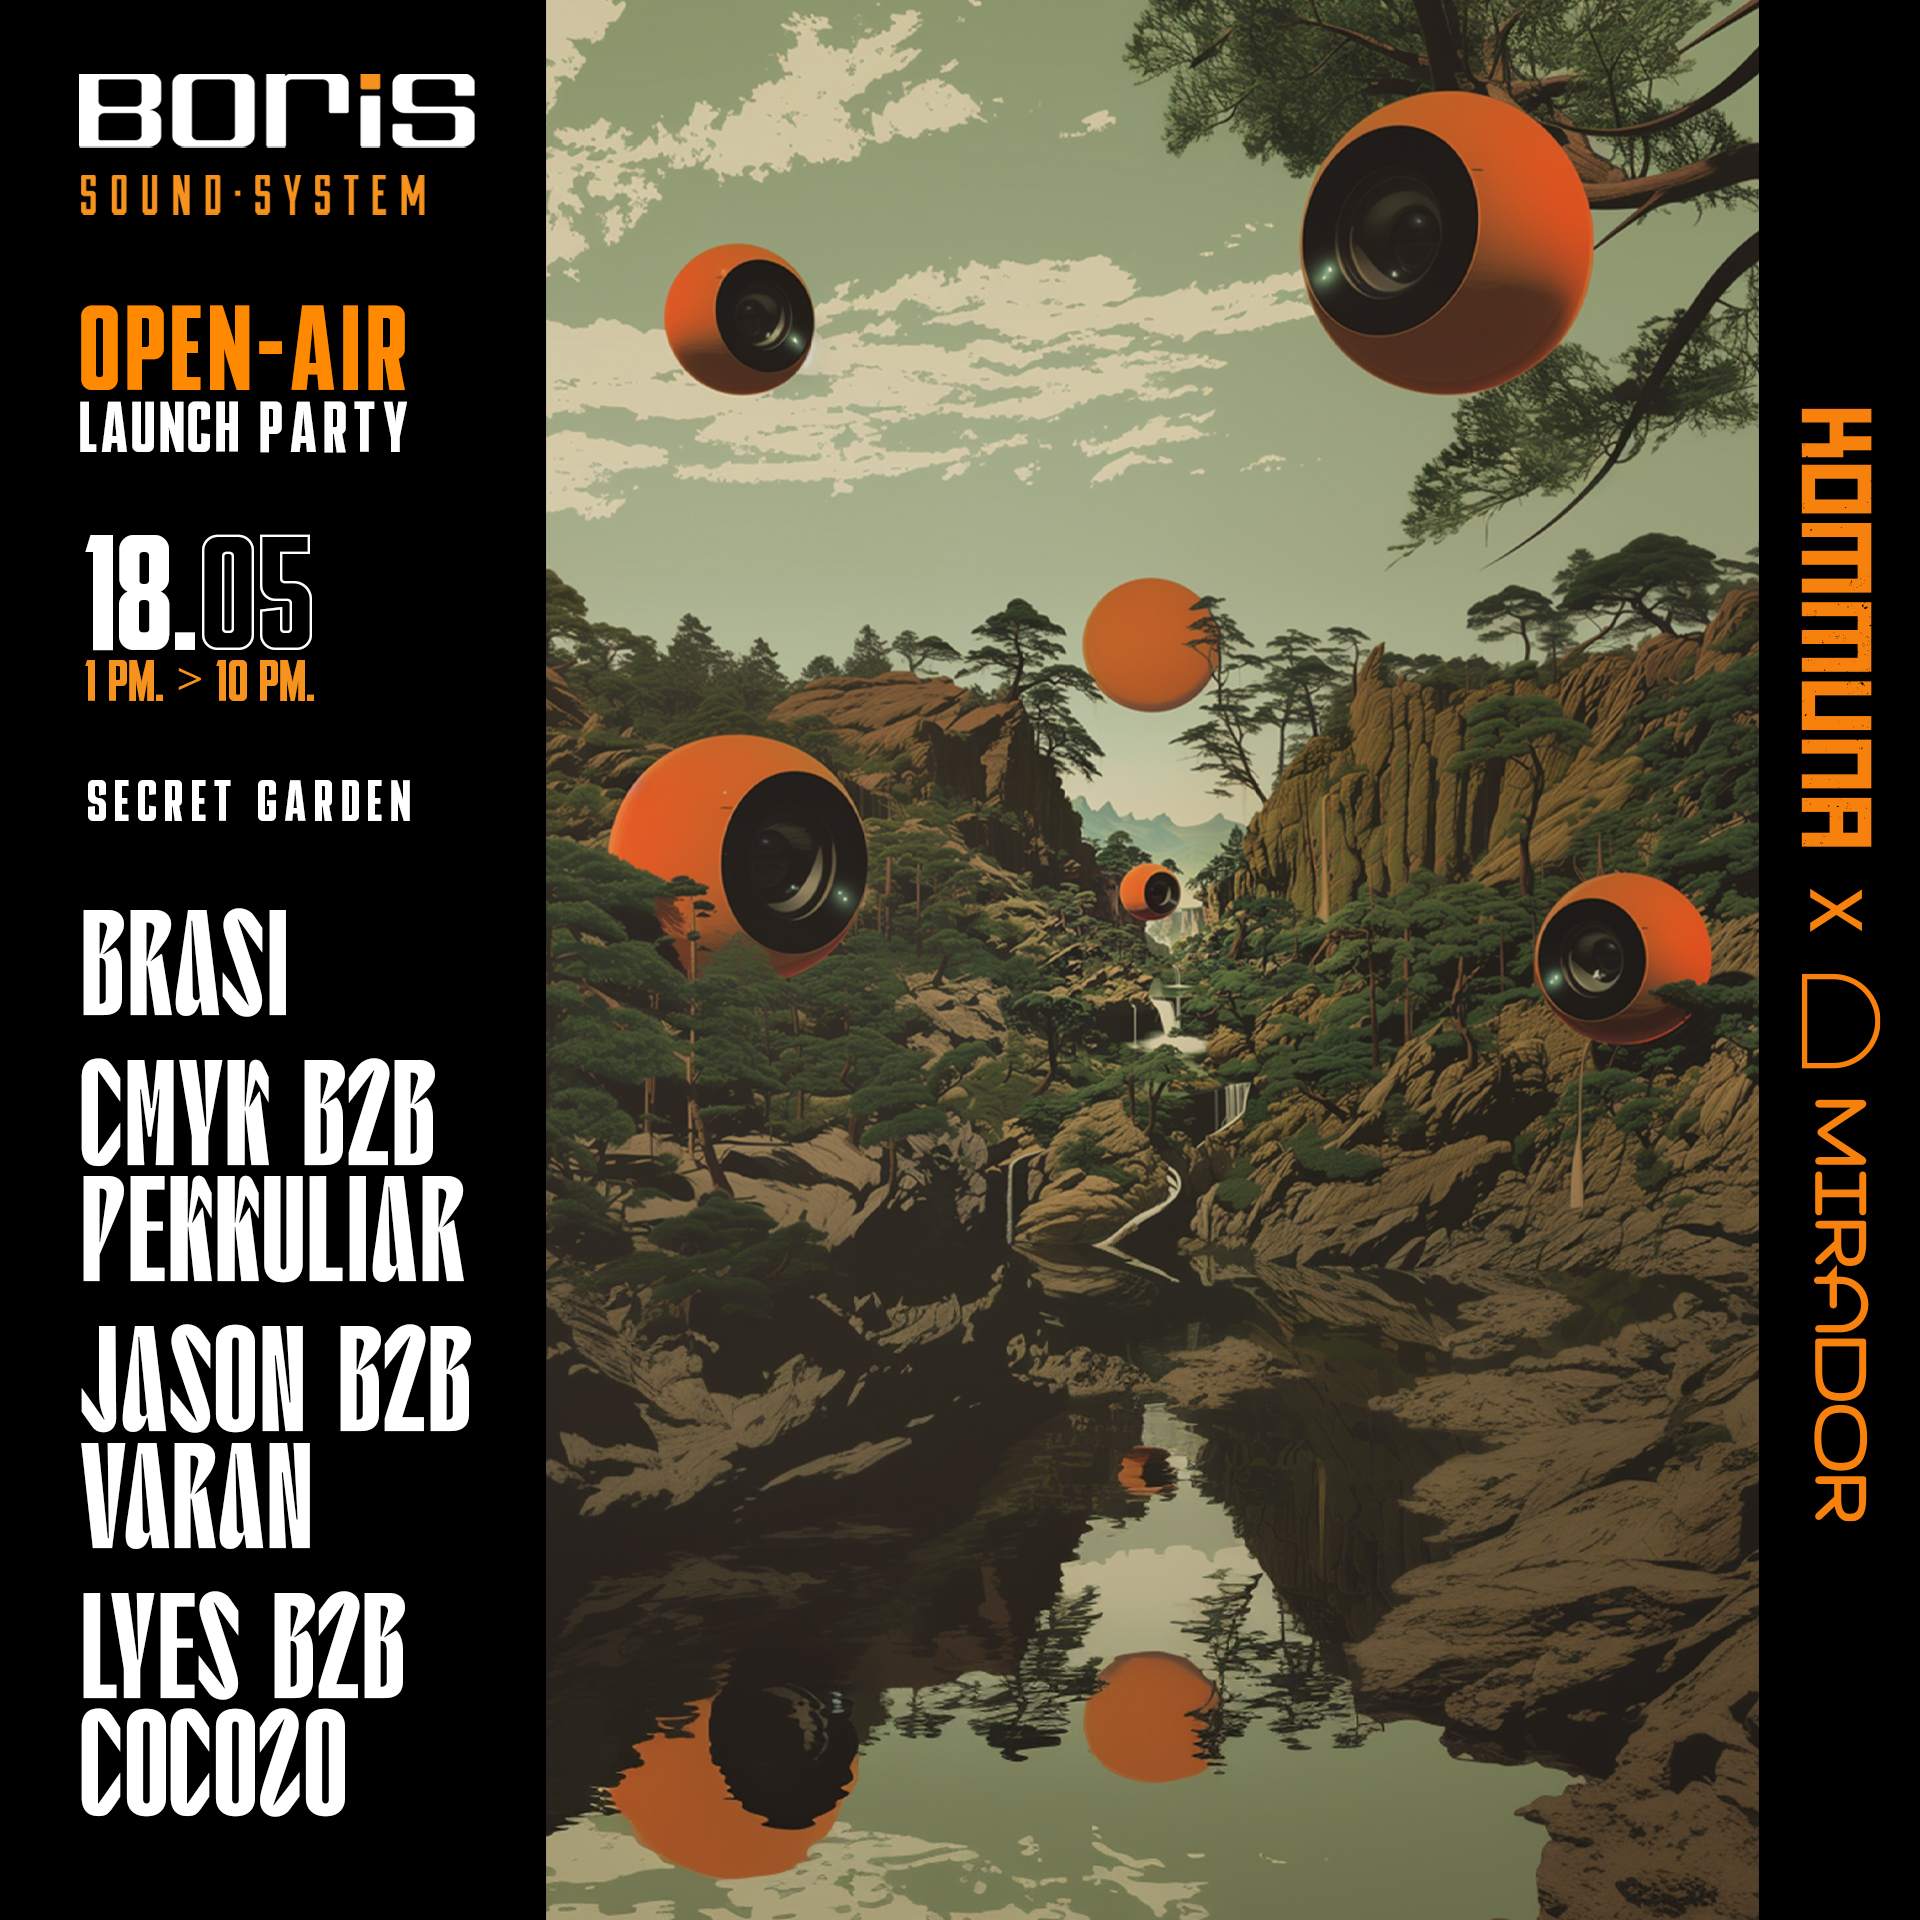 [CANCELLED] Kommuna x Mirador ● Open Air ● BORIS Sound System Launch Party - フライヤー表